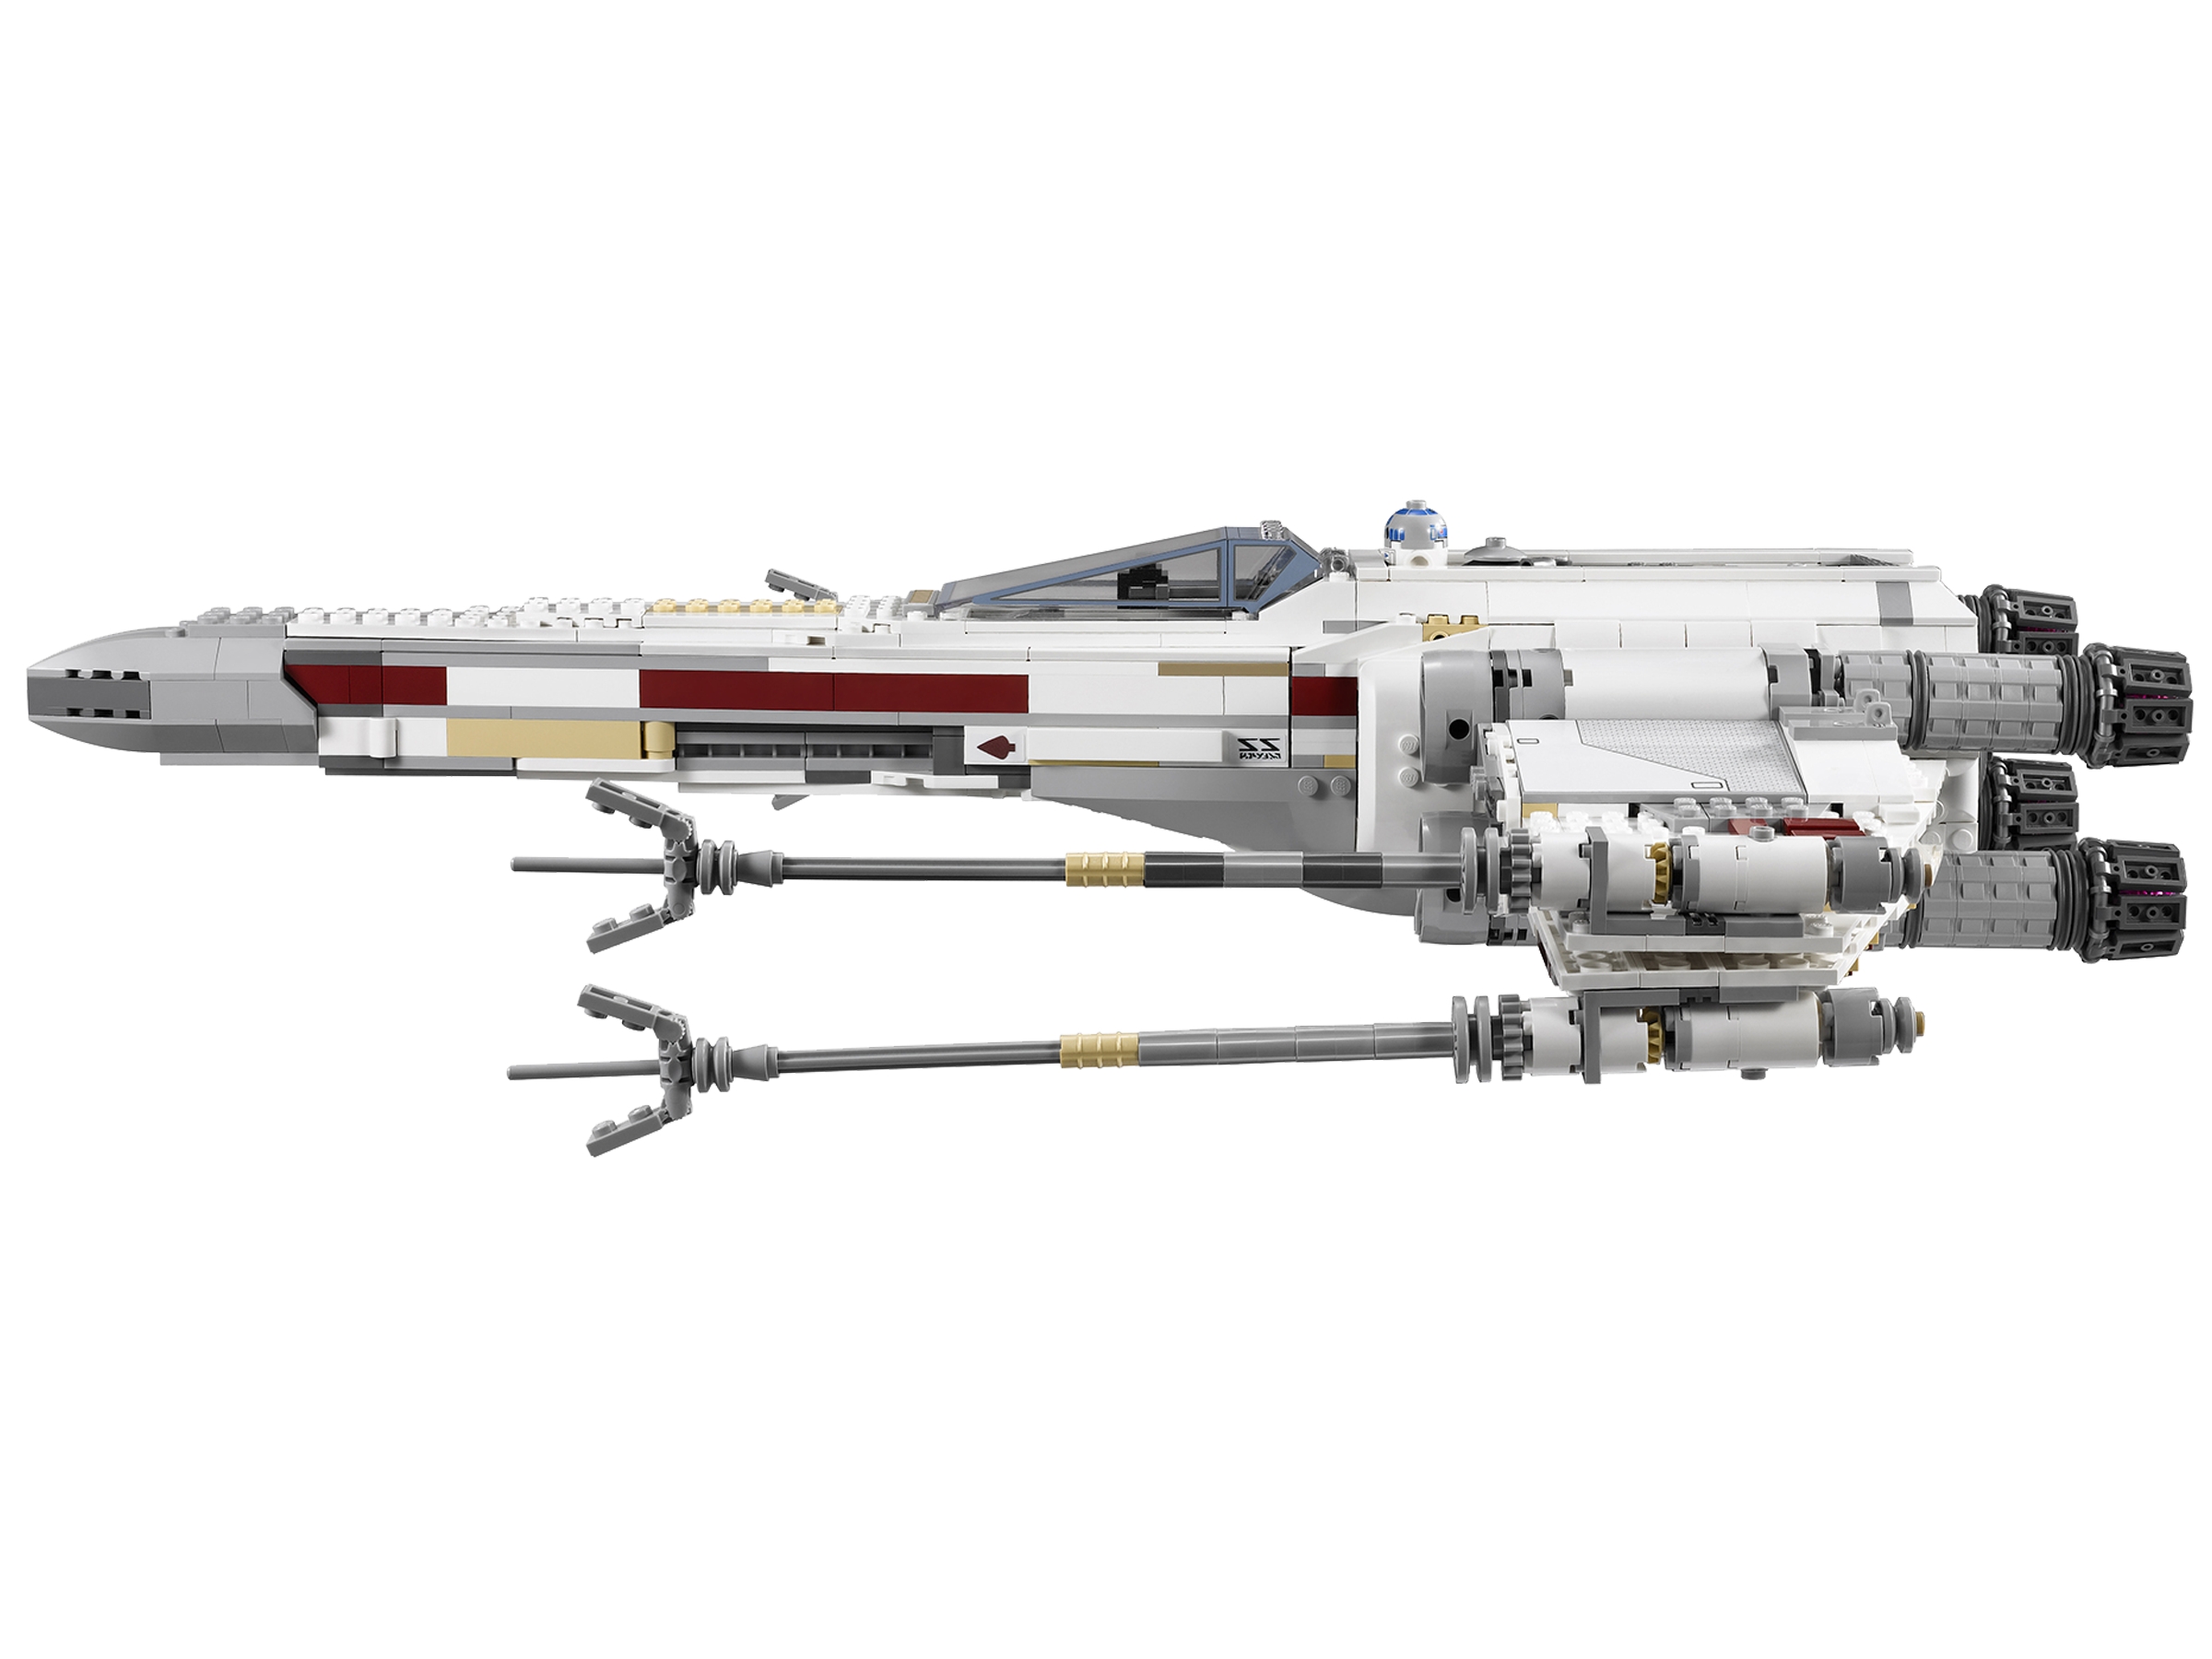 LEGO 10240 Star Wars Red Five X-wing Starfighter NIB Sealed Retired